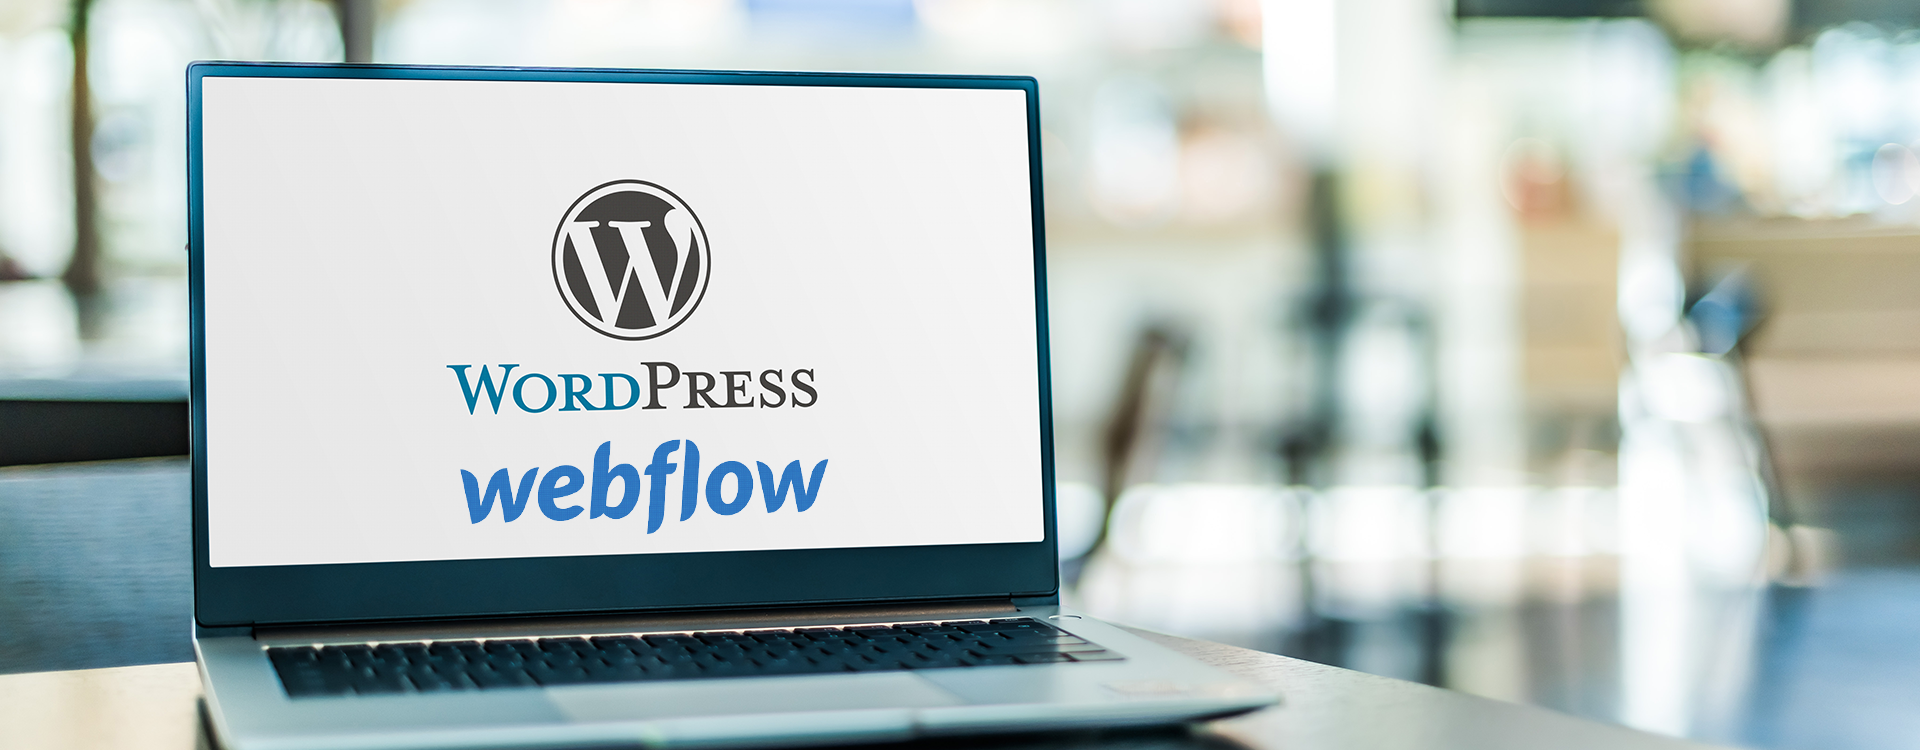 wordpress-webflow